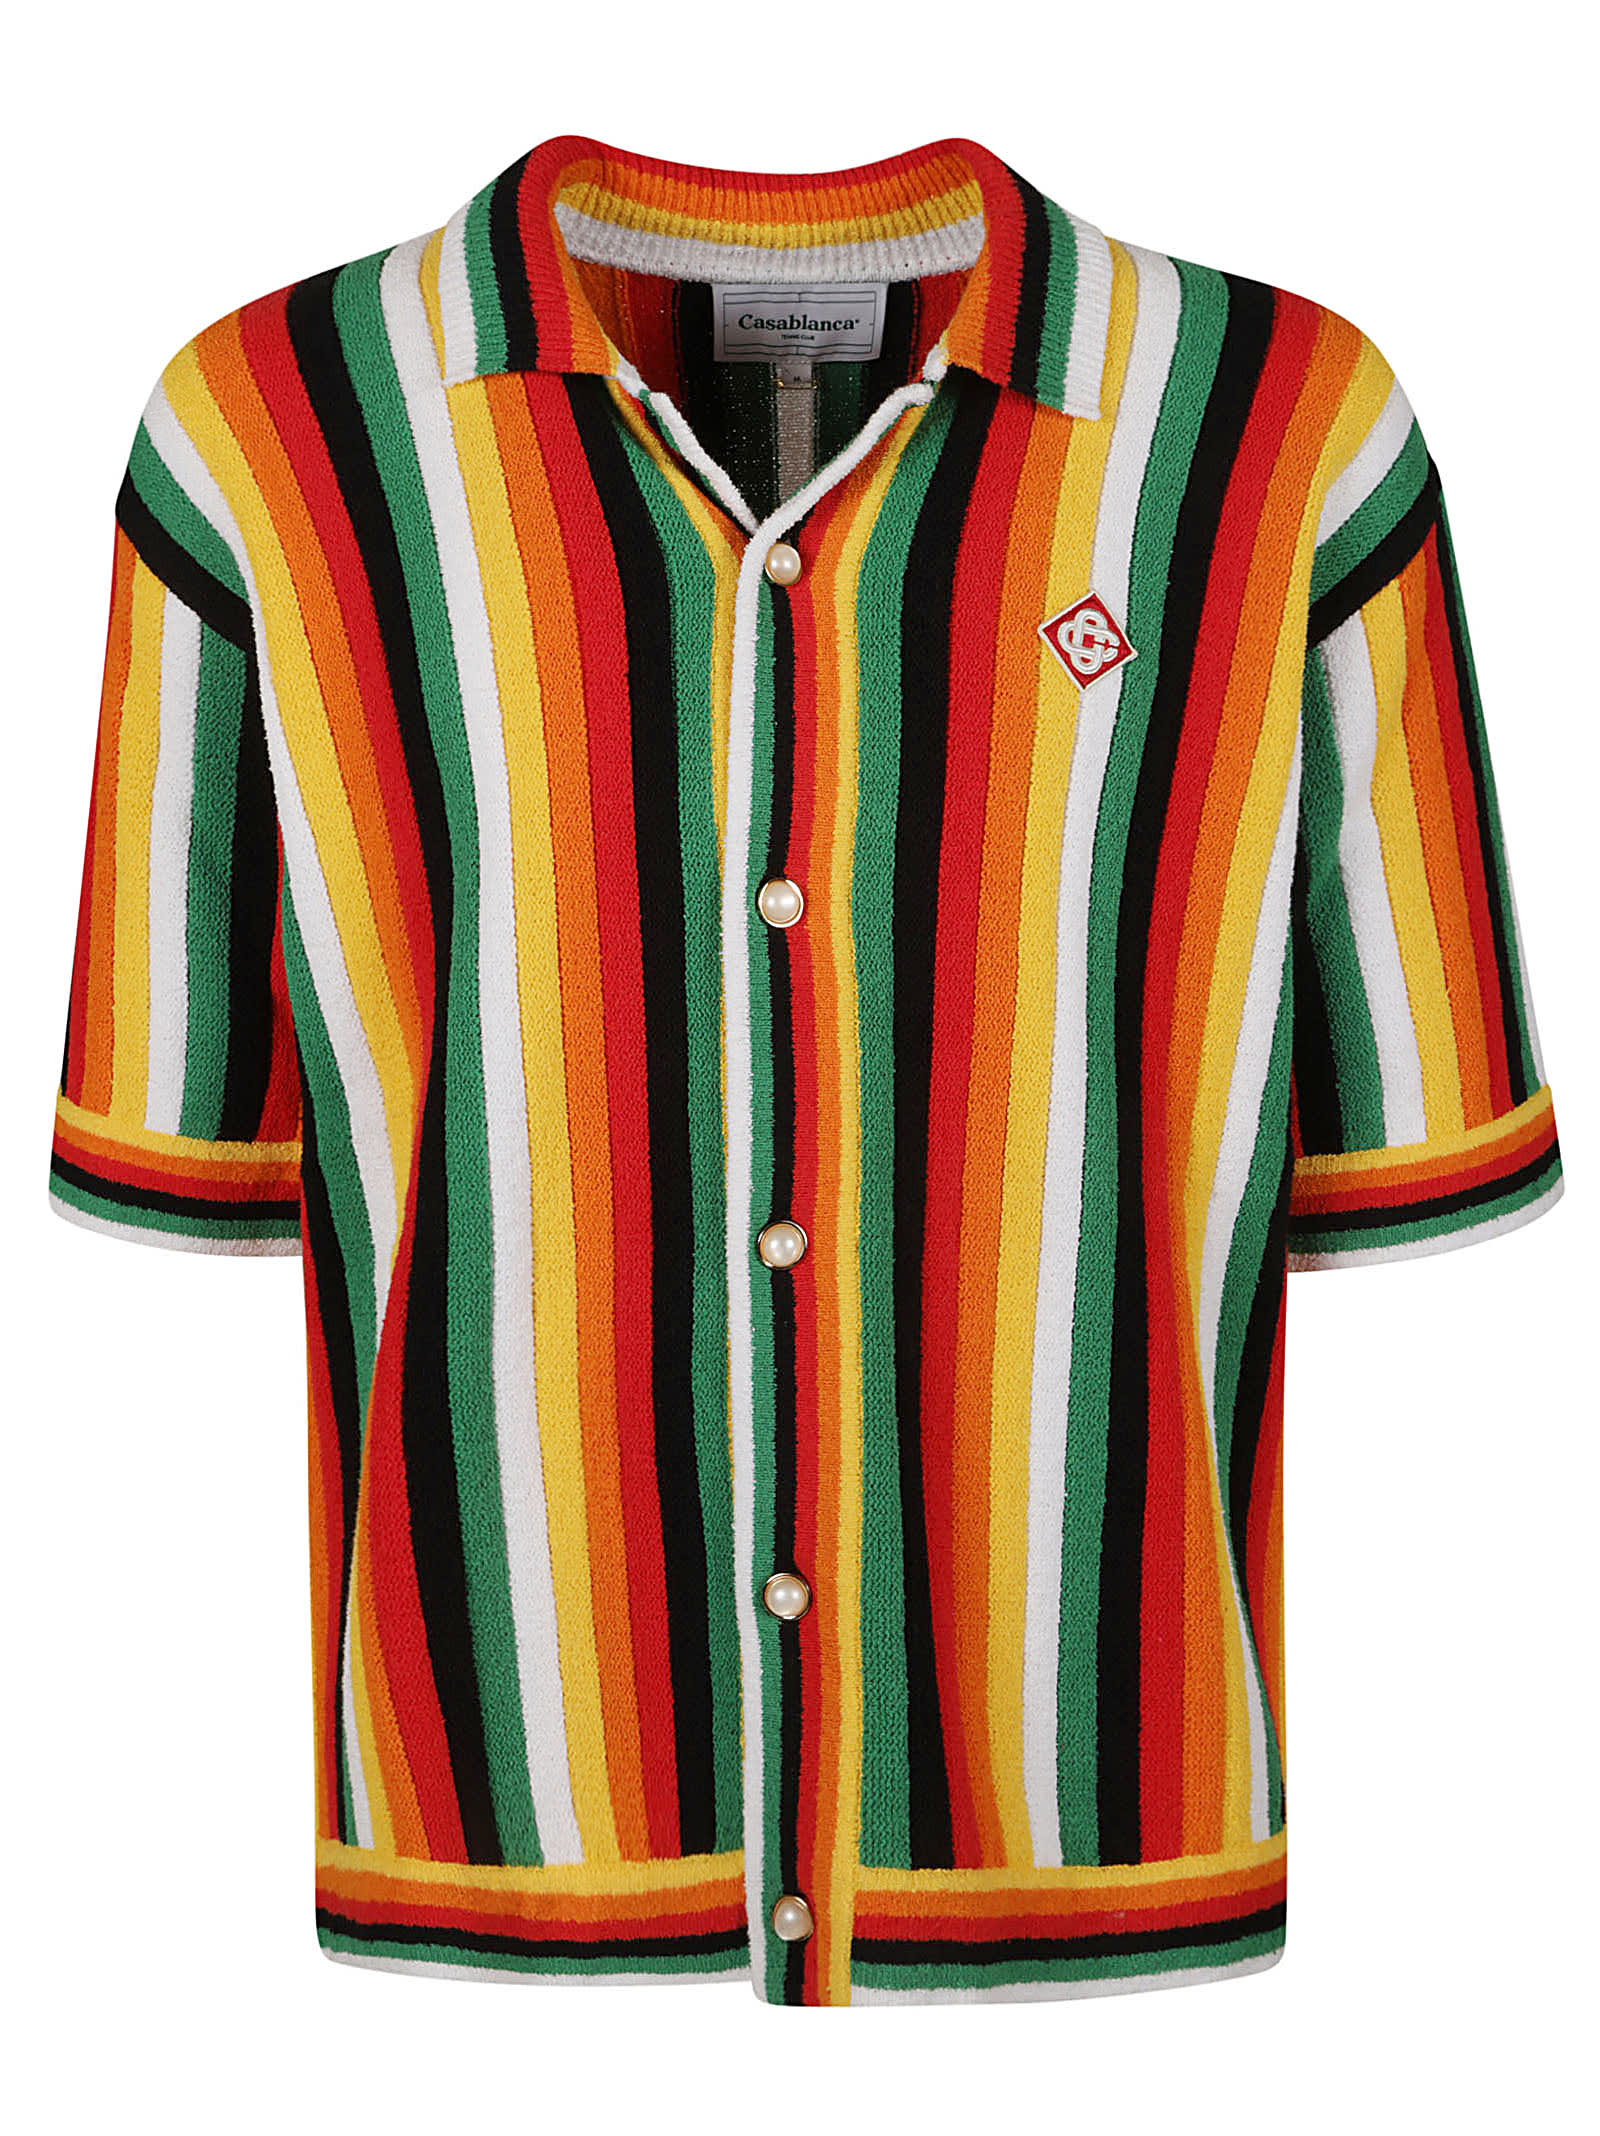 Casablanca Multicolored Terry Shirt